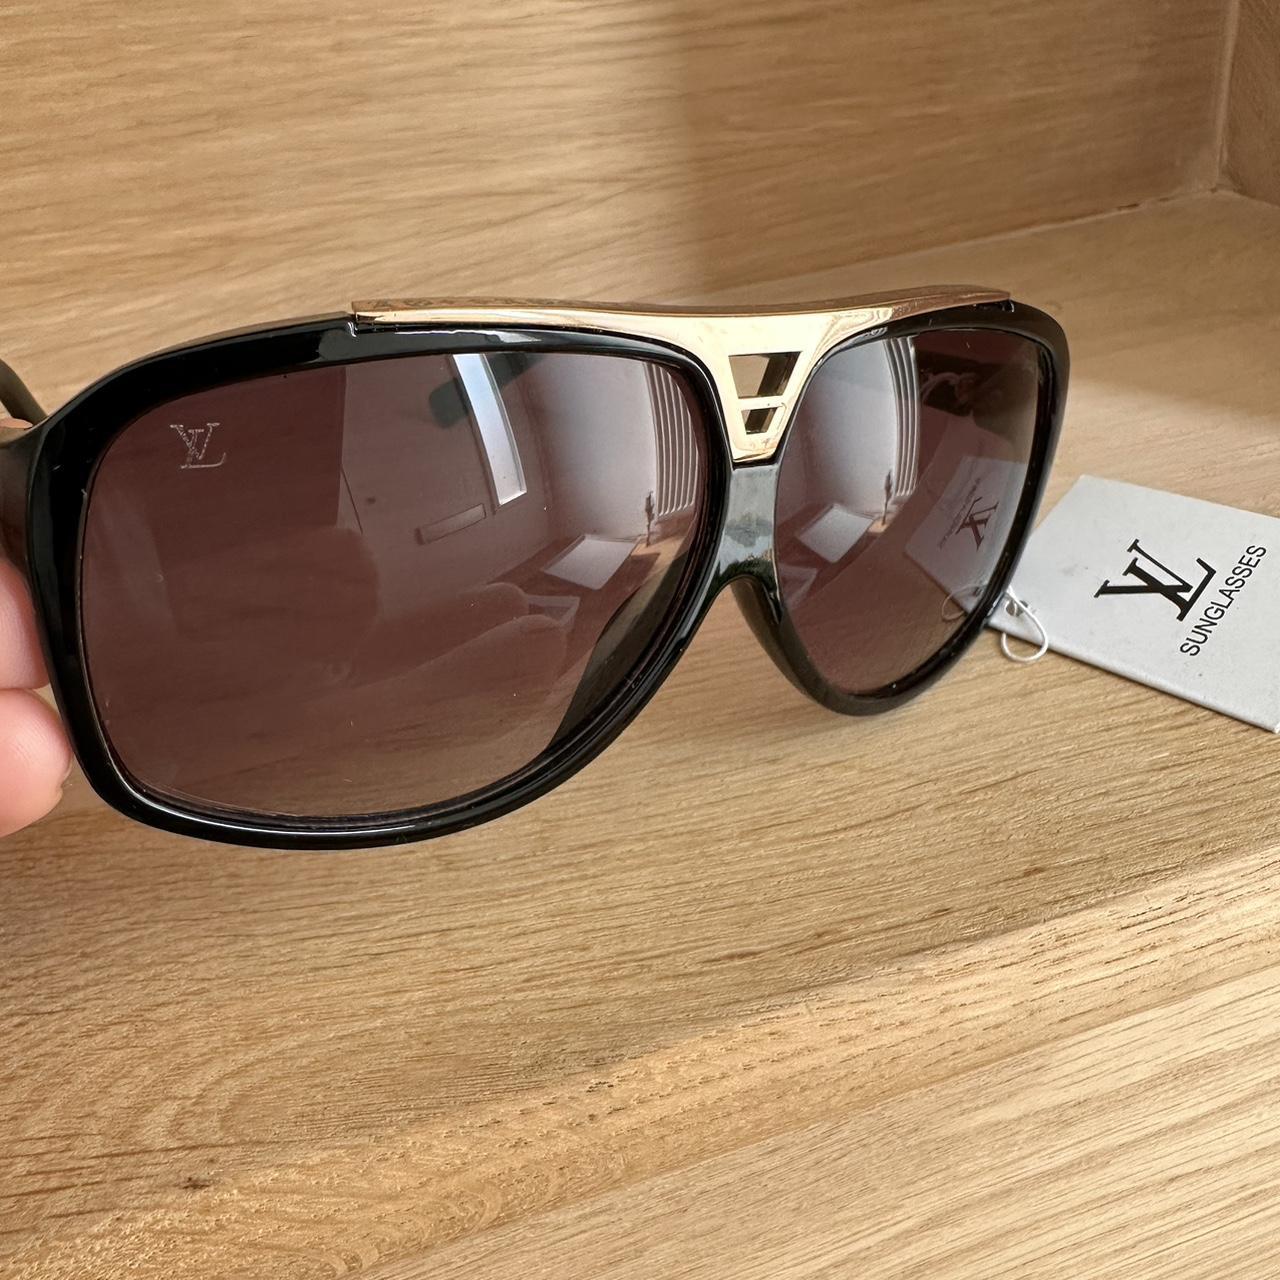 Louis vuitton evidence sunglasses - Depop